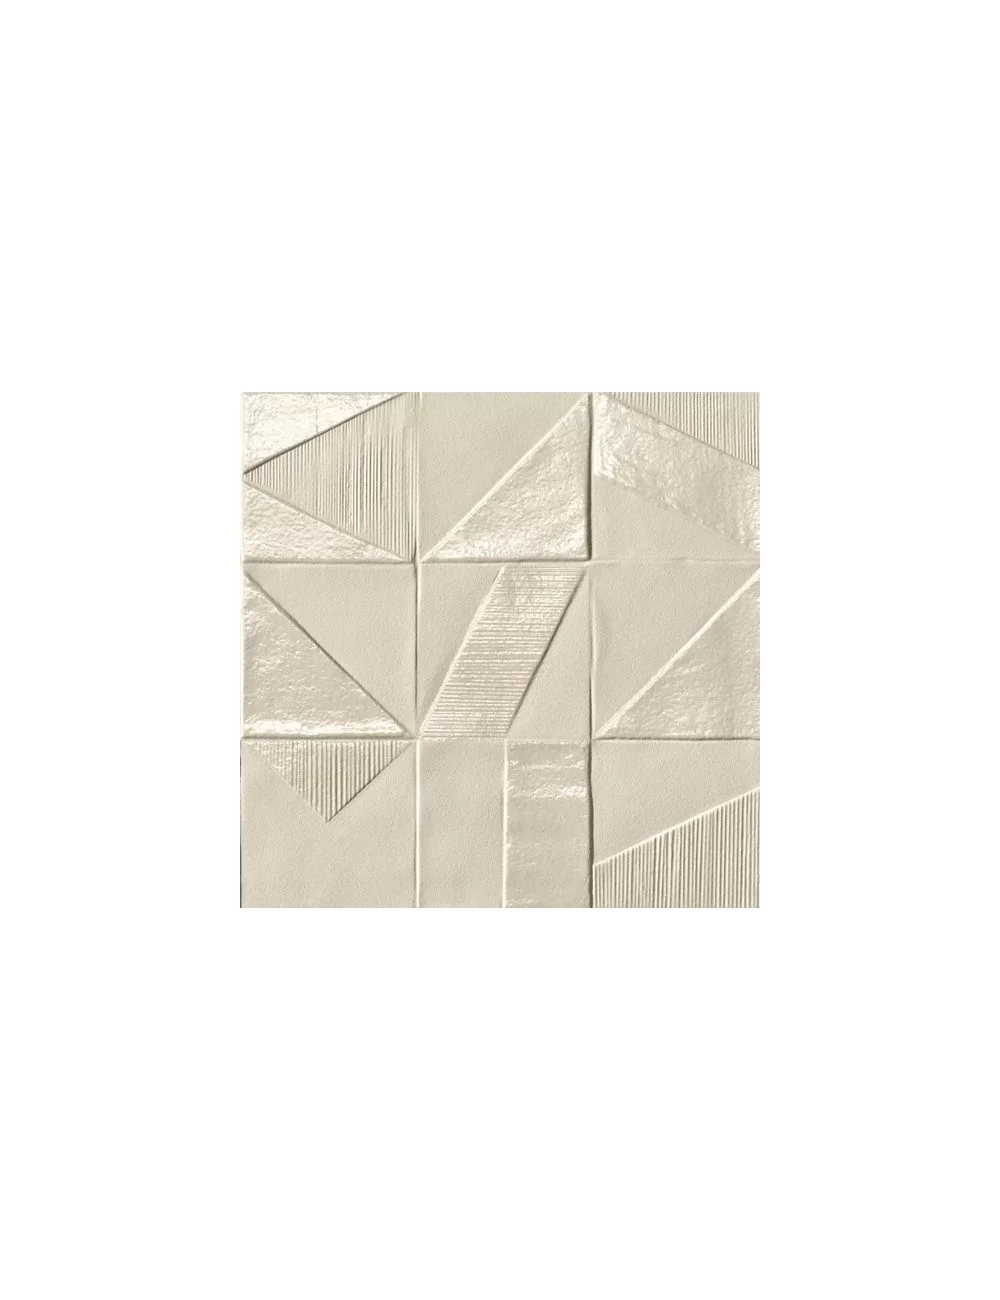 mat&more domino beige 25x75 dettaglio superficie